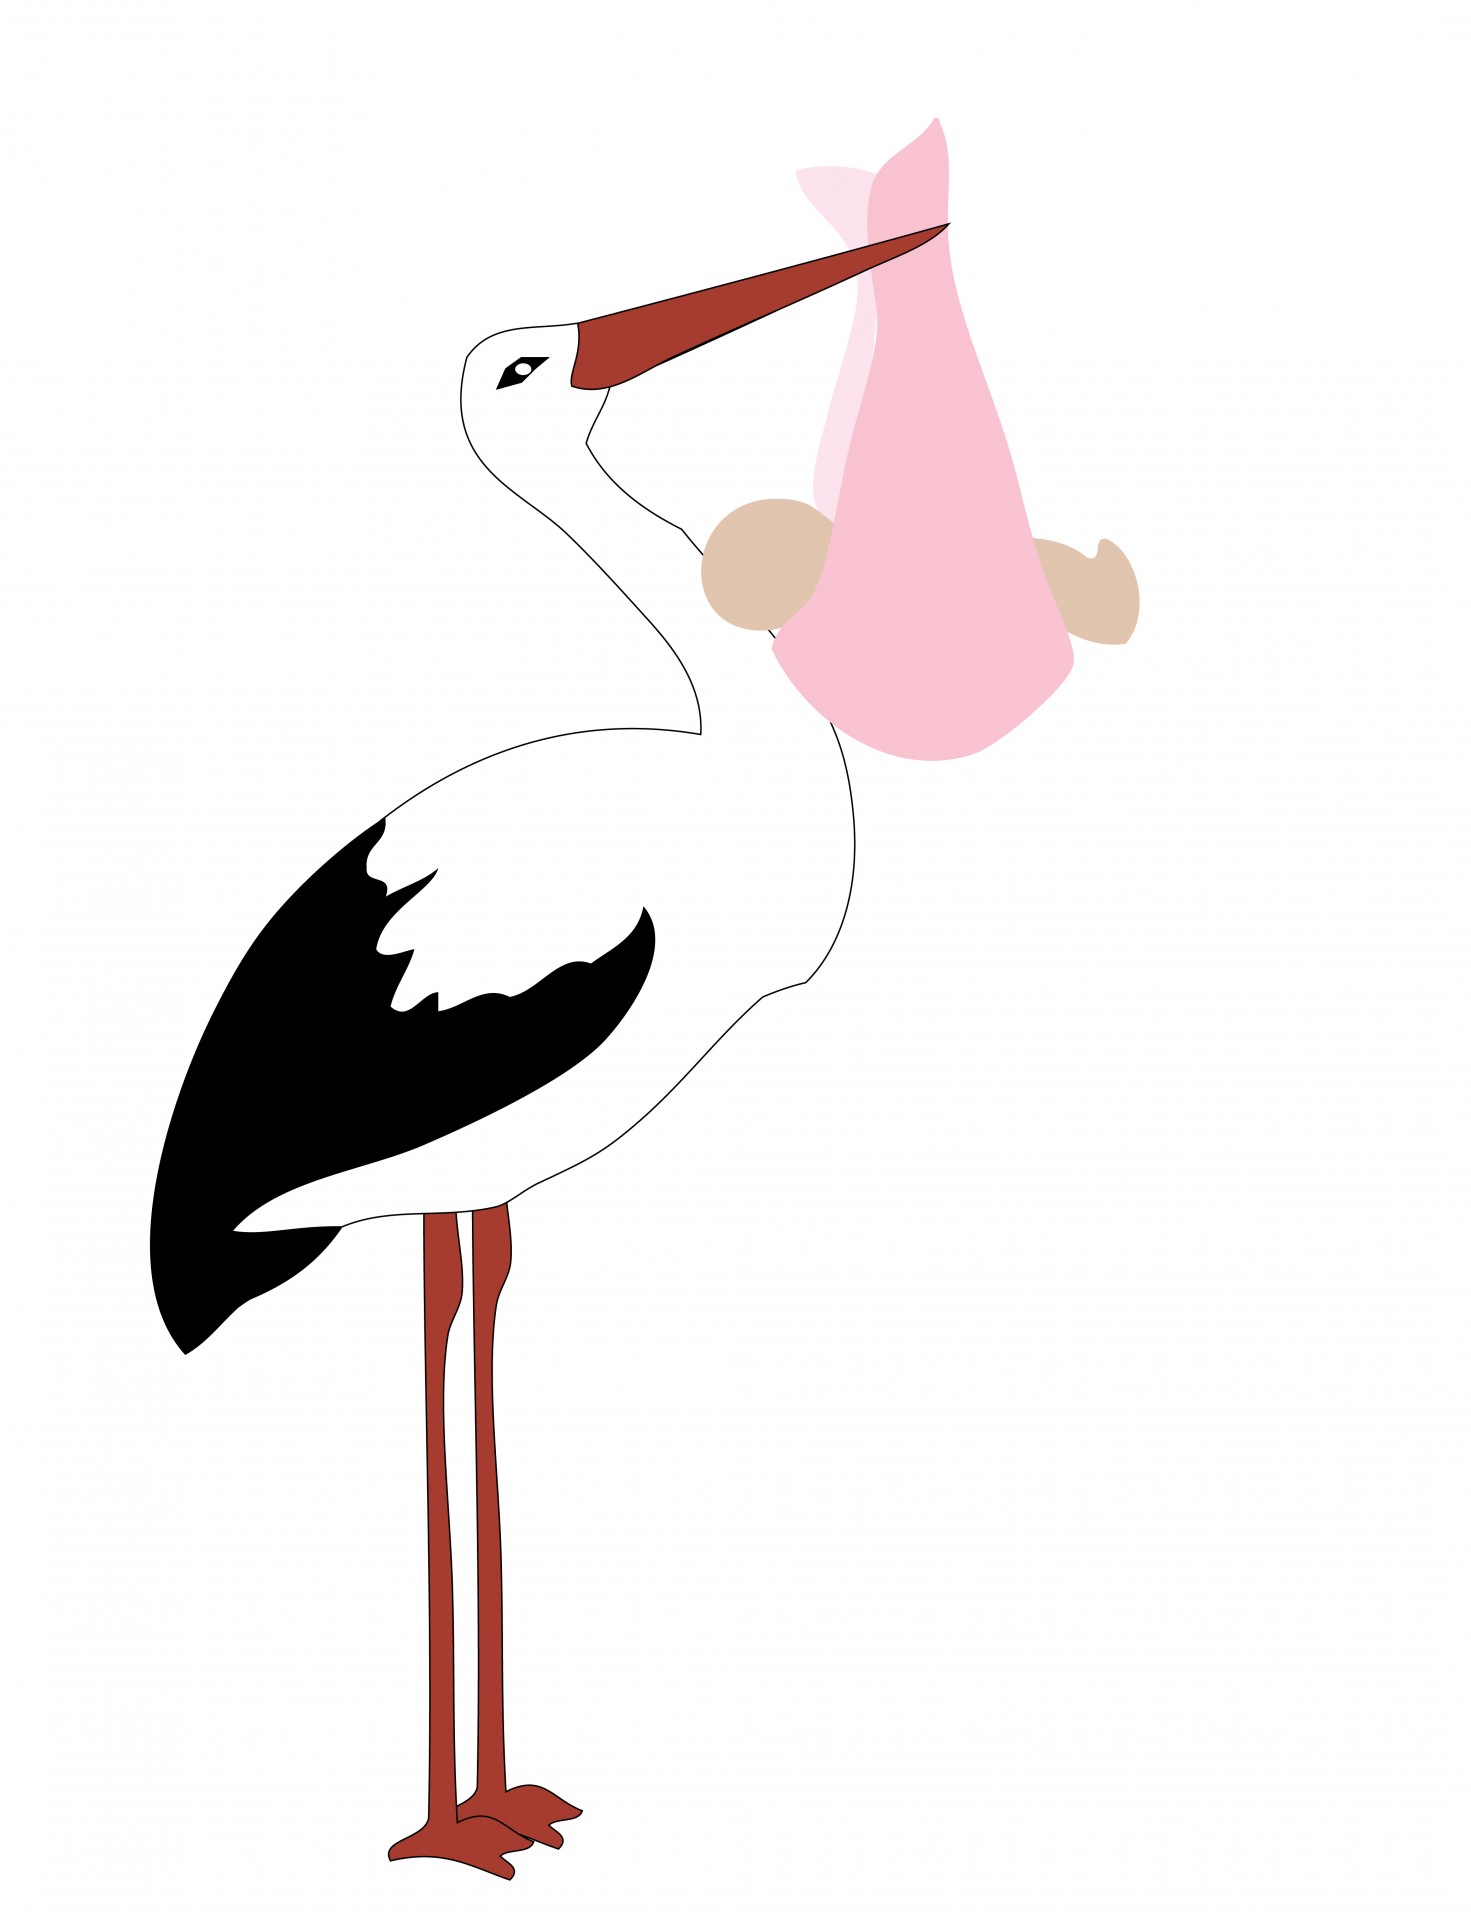 Stork carrying baby girl illustration for card making